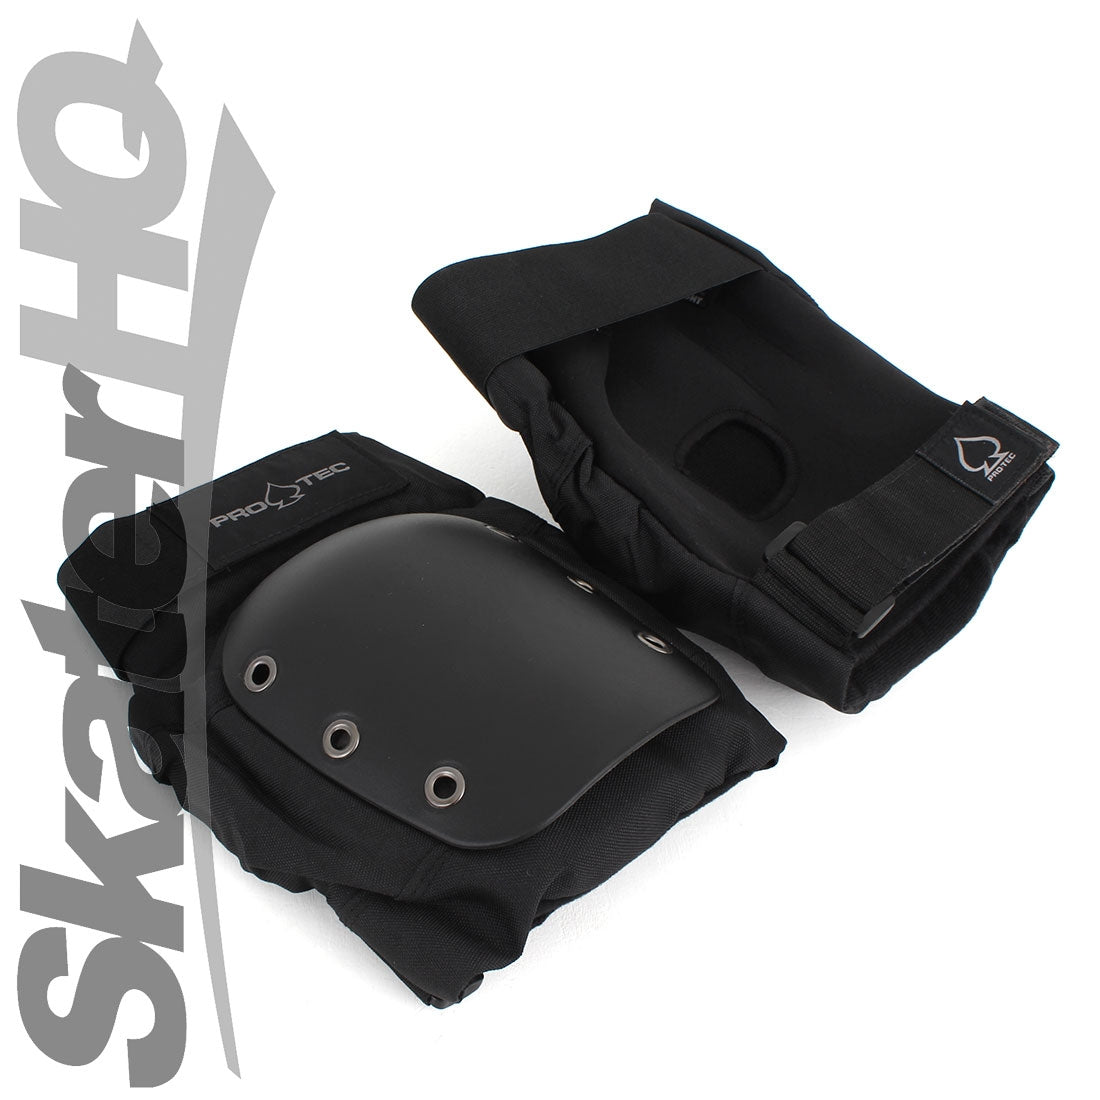 Pro-Tec Street Knee/Elbow Pad Set - Black Protective Gear